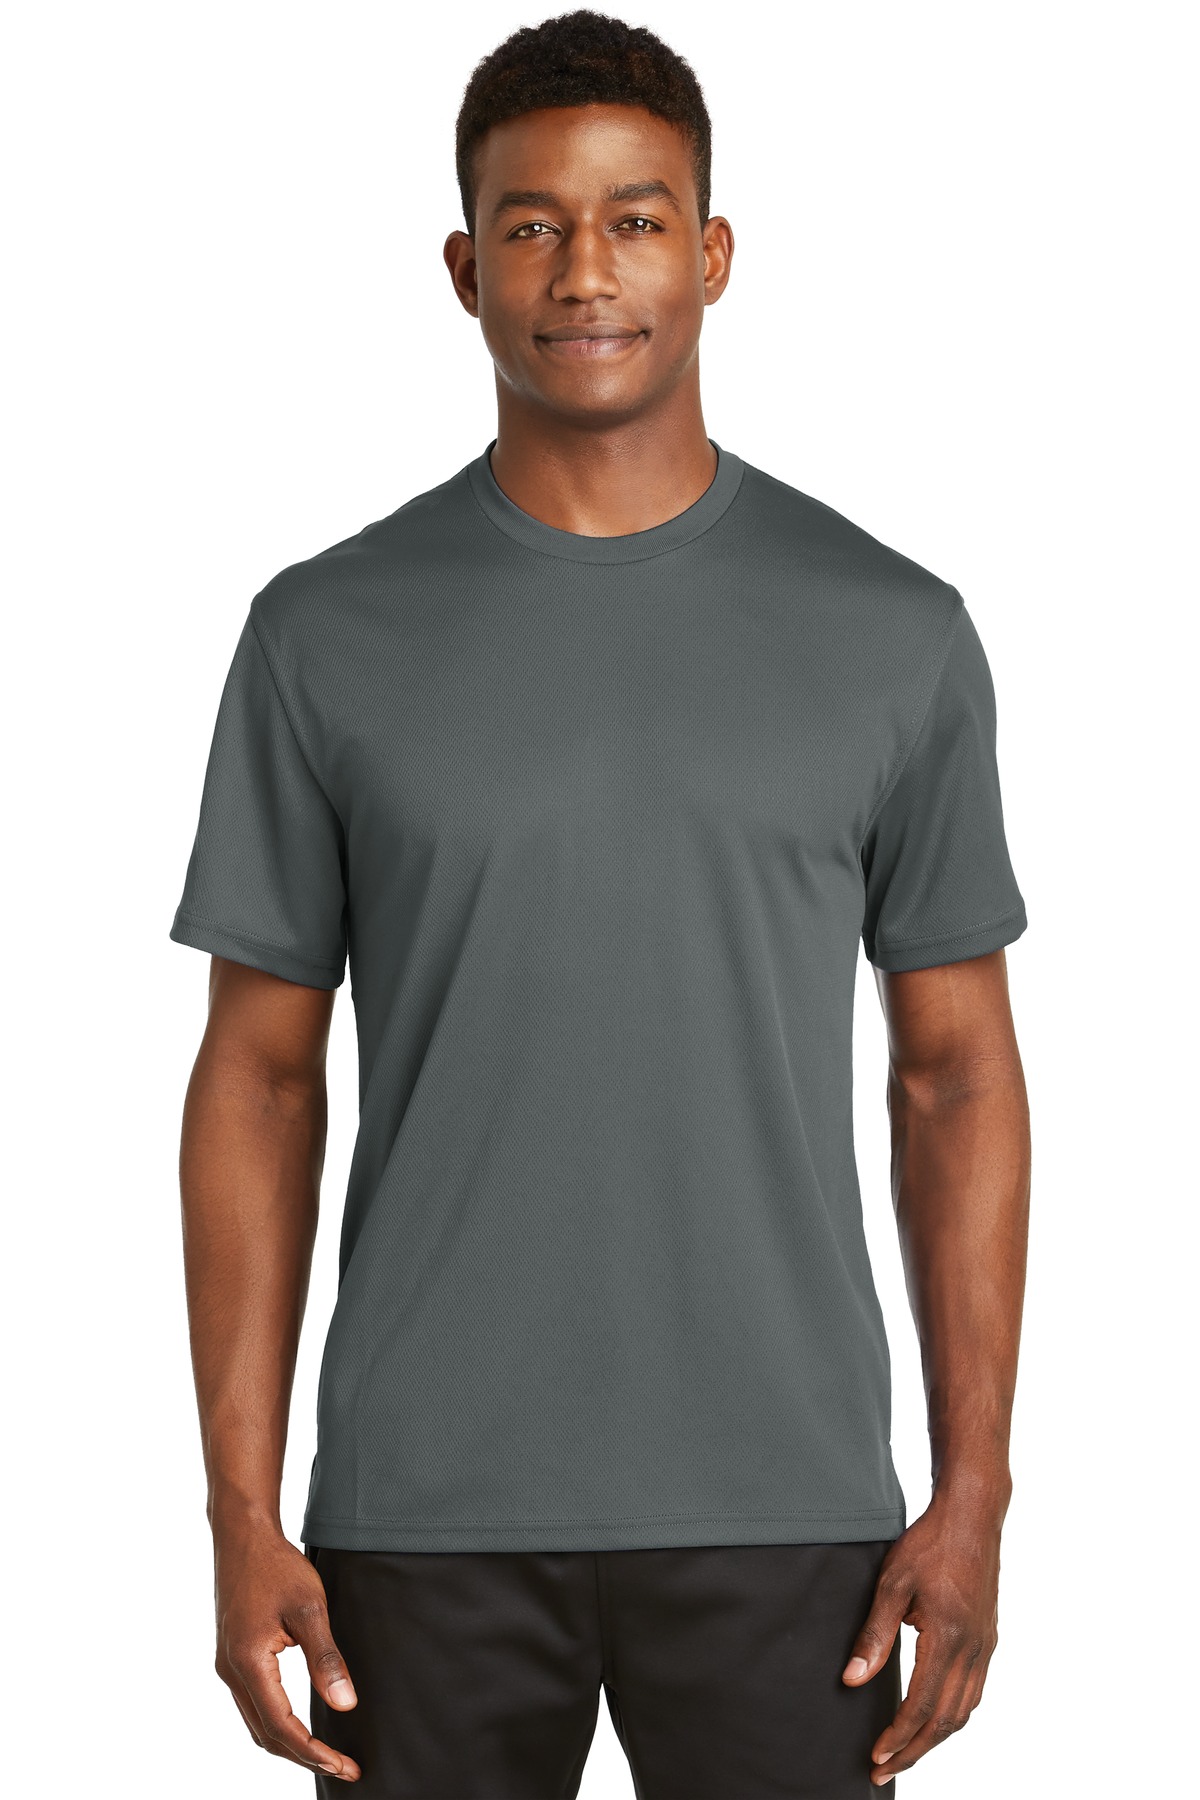 https://images.shirtspace.com/fullsize/vrXihXzOwKUmneA5W6%2BTFQ%3D%3D/71541/9897-sport-tek-k468-dri-mesh-short-sleeve-t-shirt-front-steel.jpg